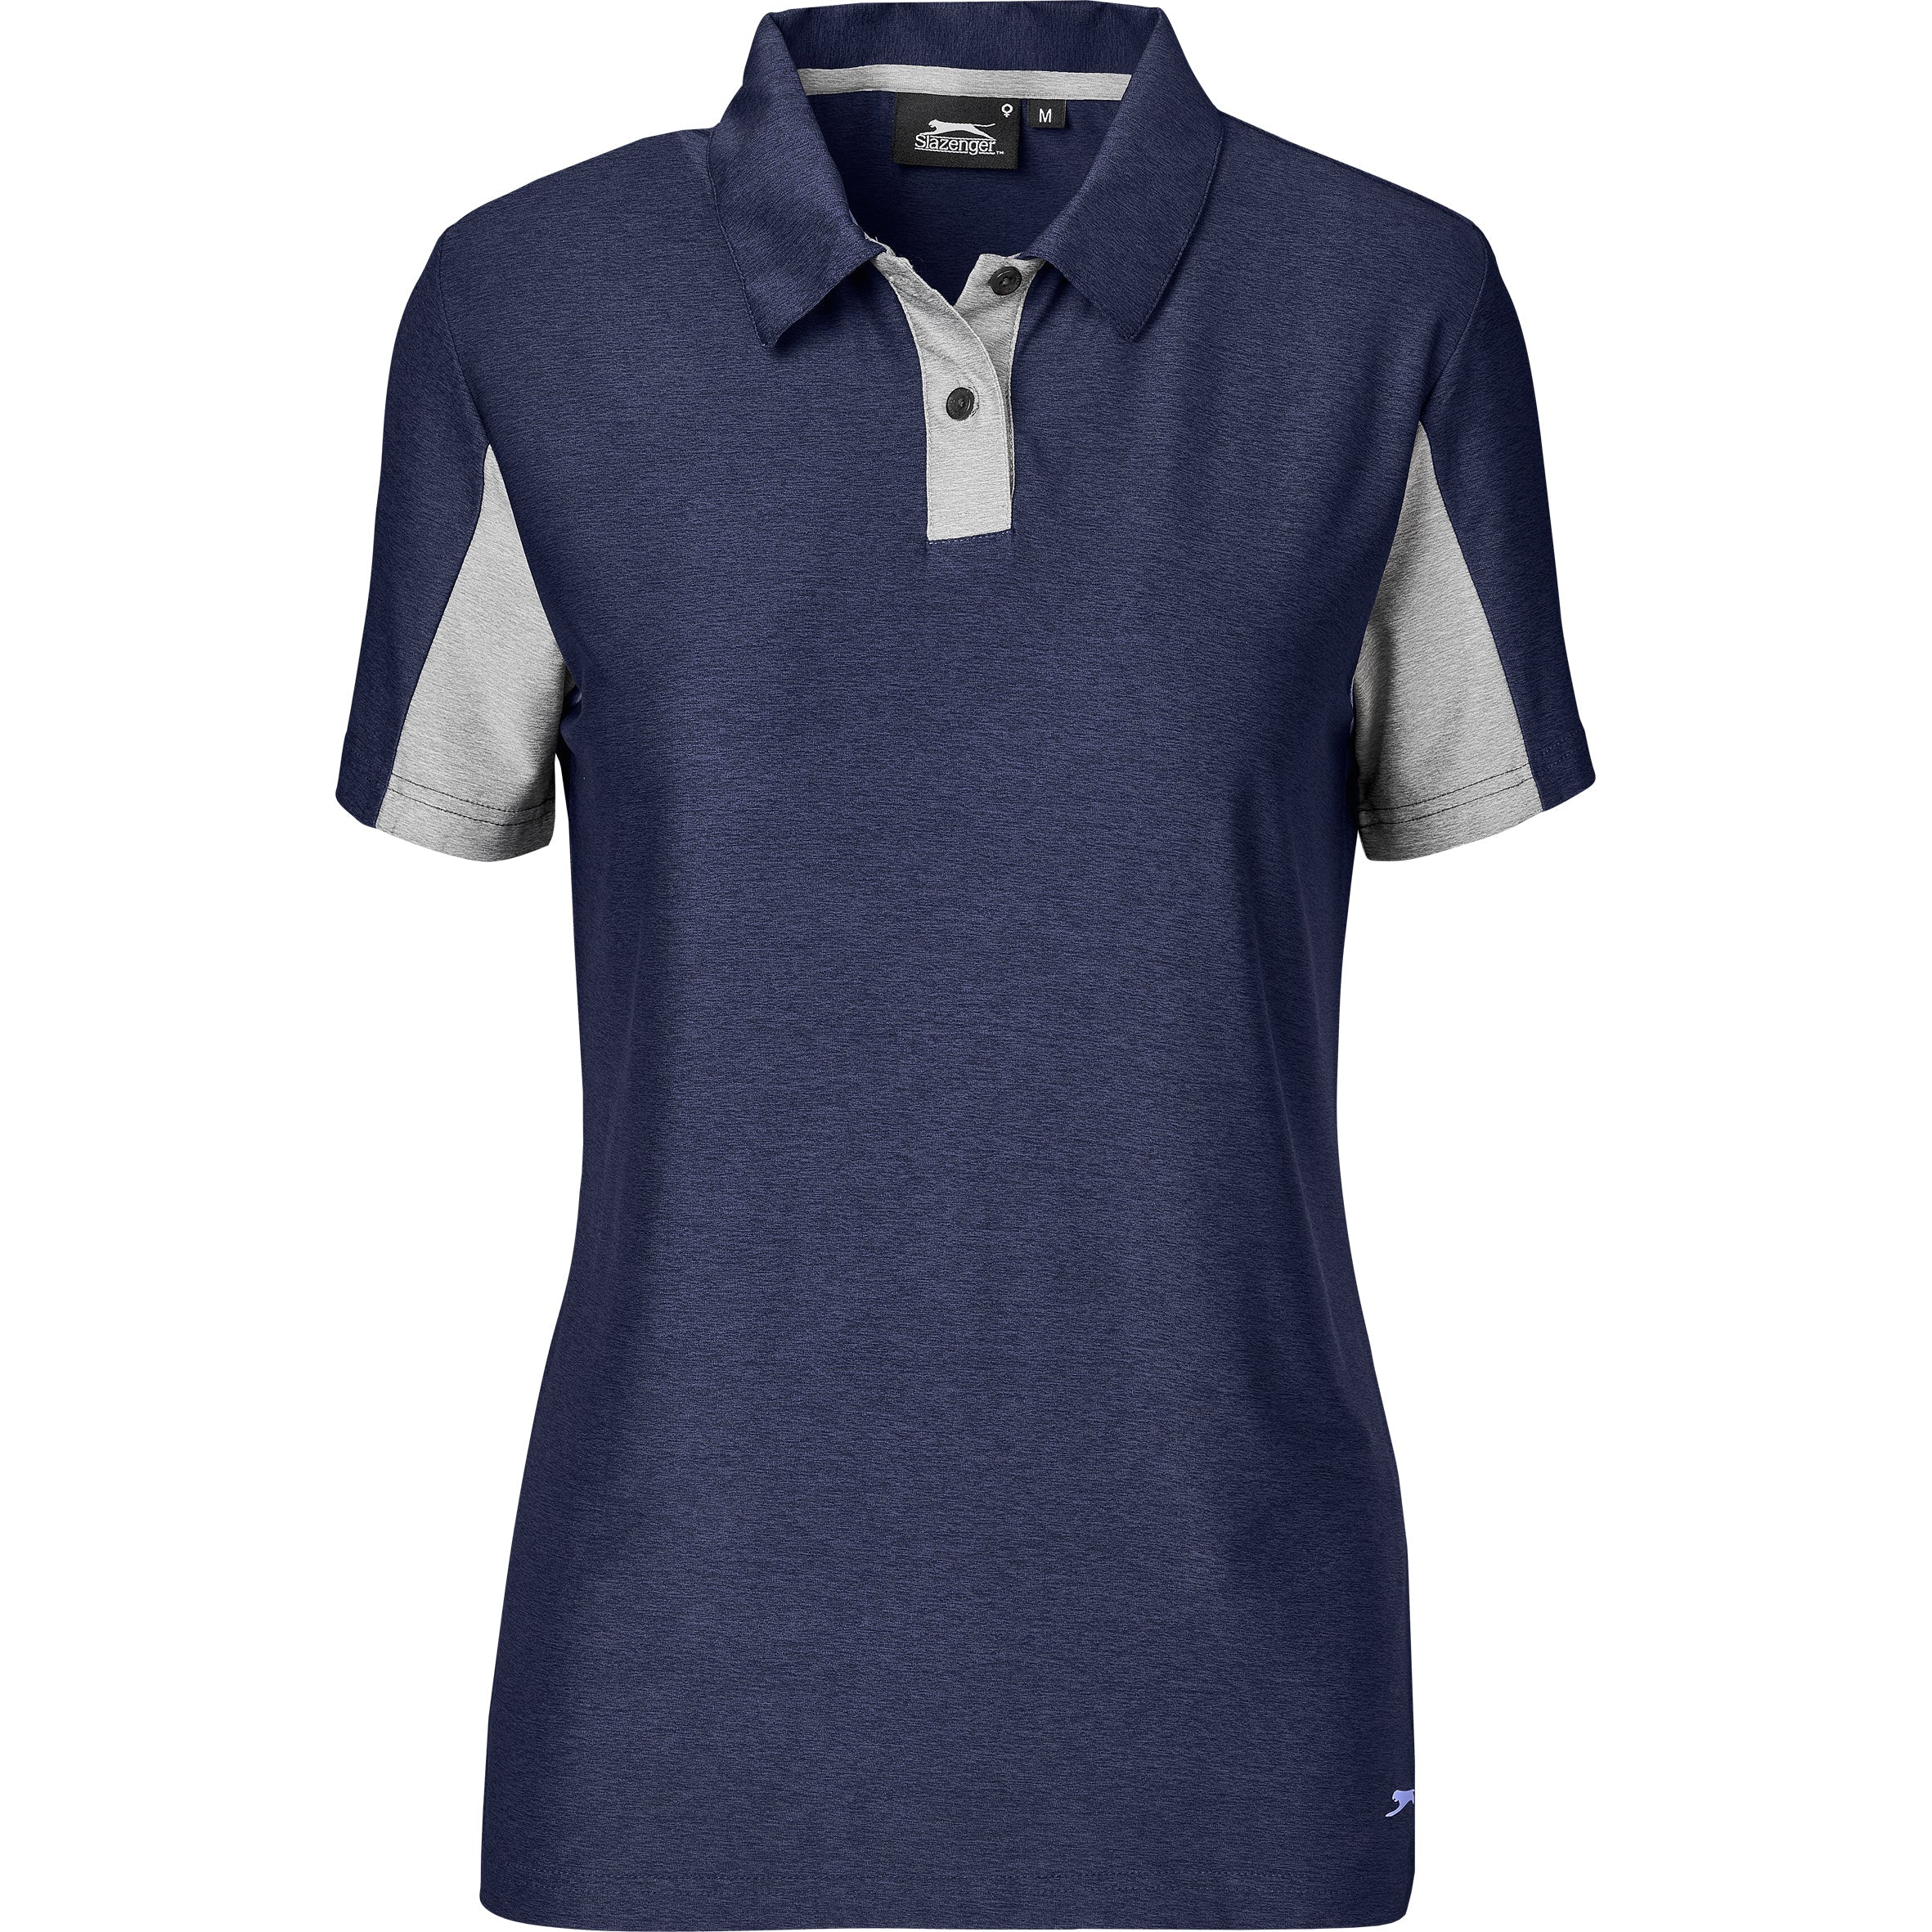 Ladies Dorado Golf Shirt-